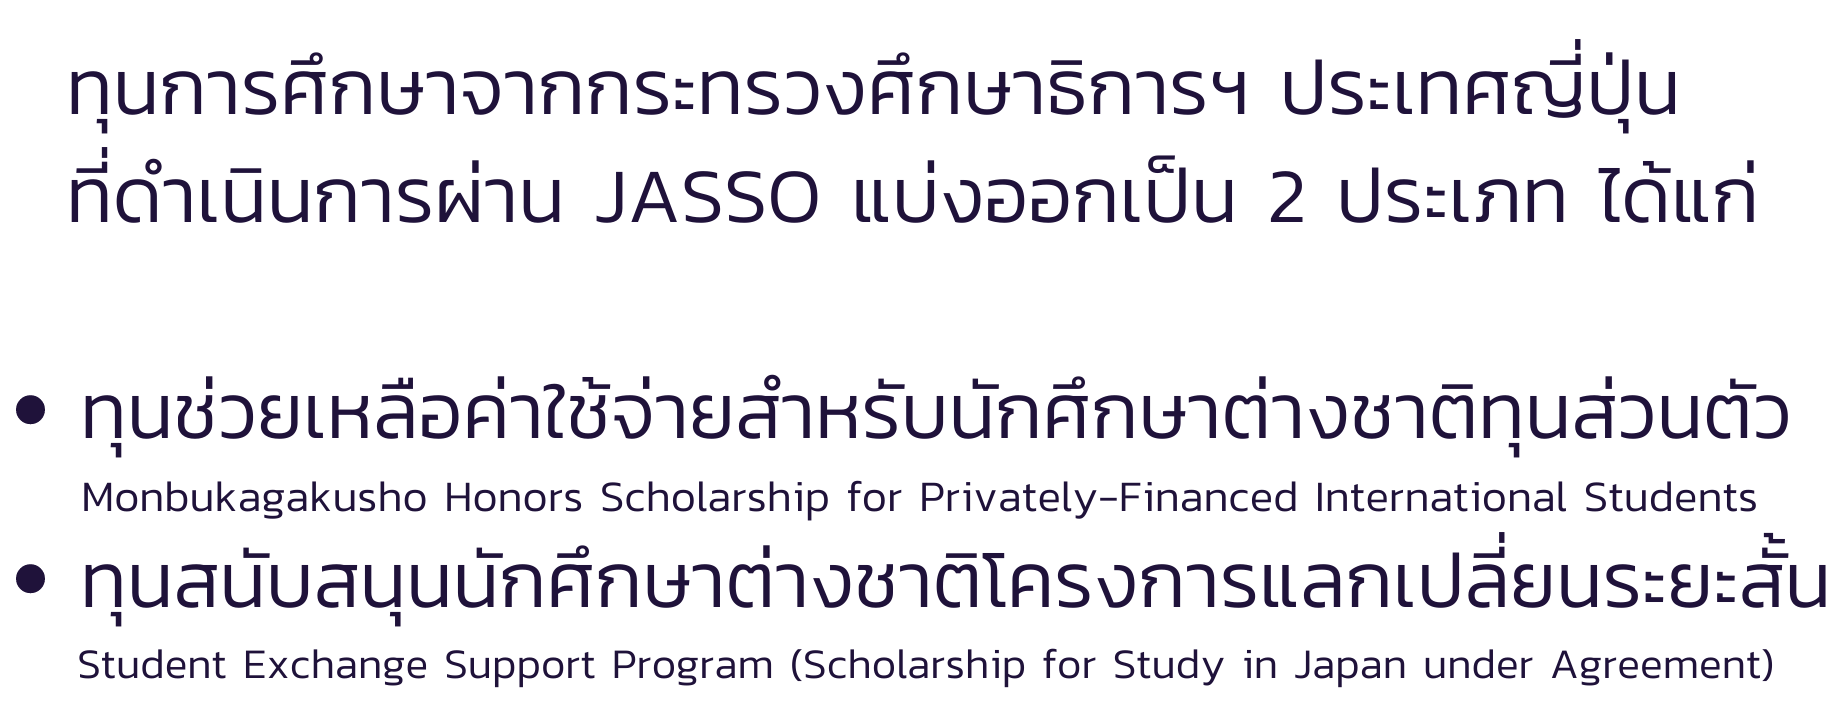 Jasso Scholarship Programs - Jeic-Bangkok